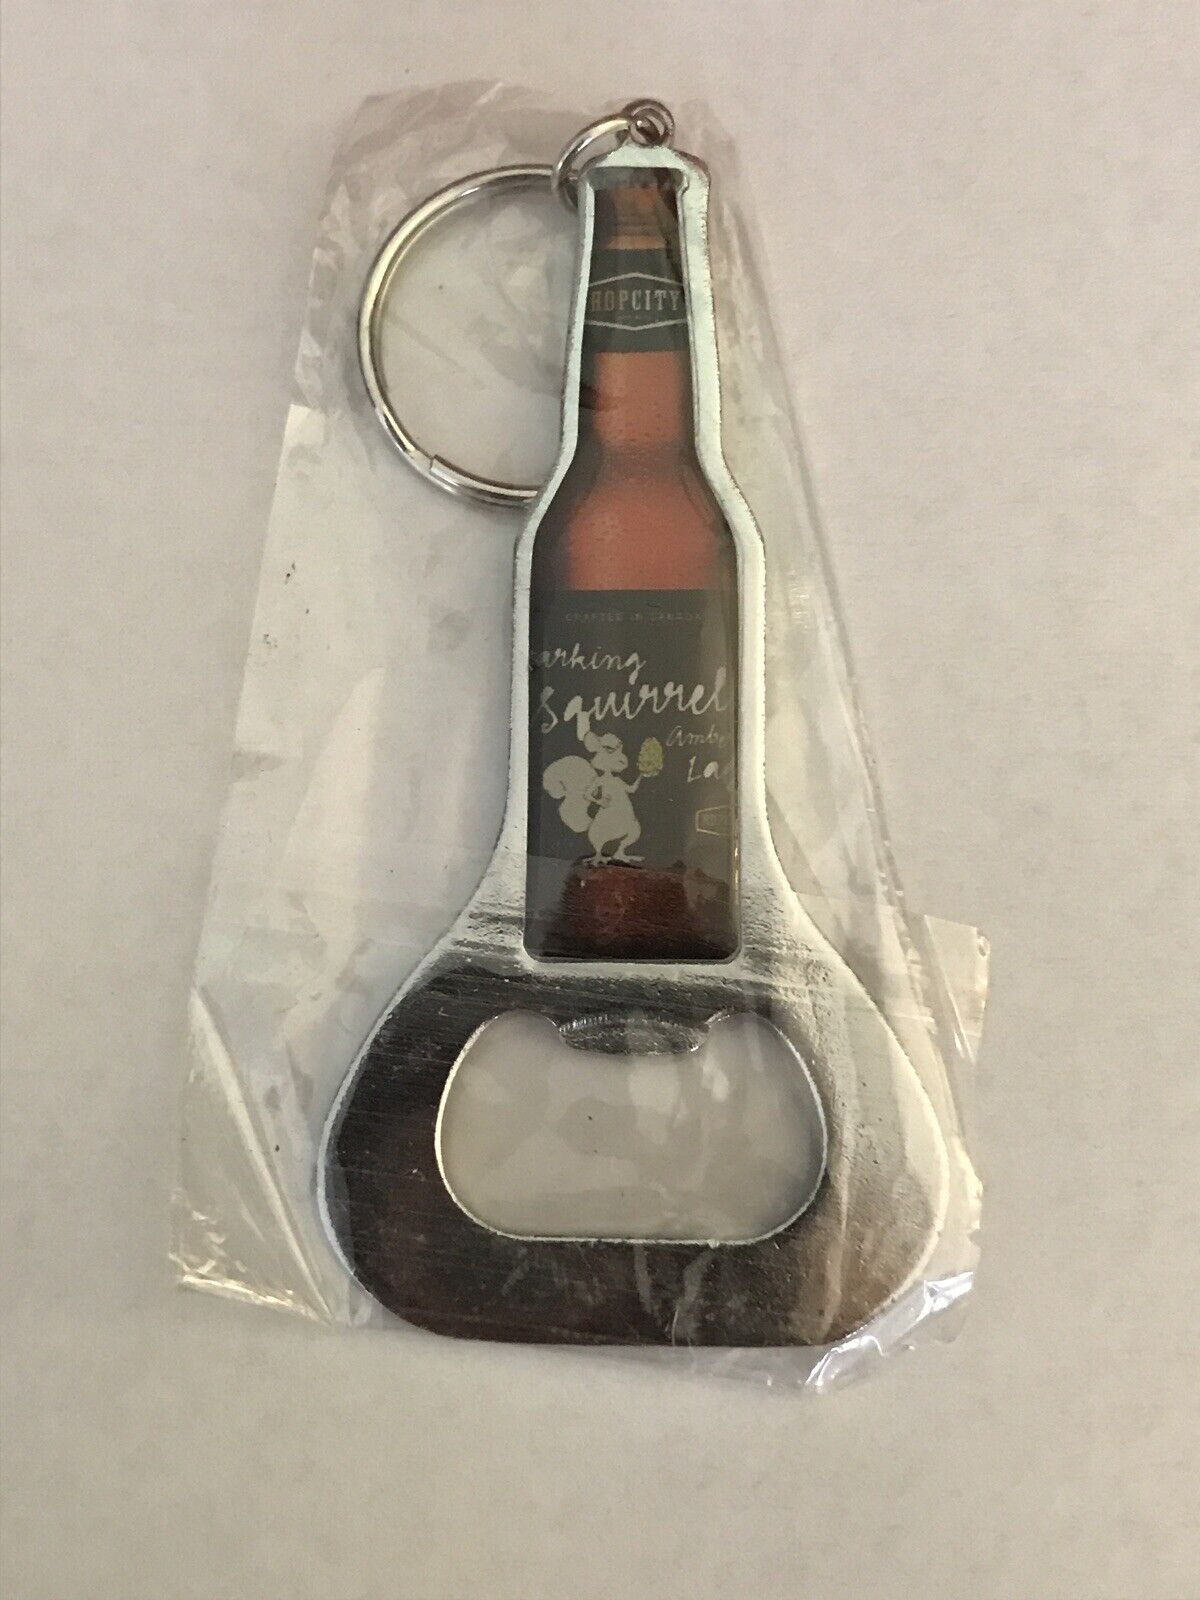 Hop City Barking Squirrel Amber Lager Keychain Beer Bottle Opener New/Sealed